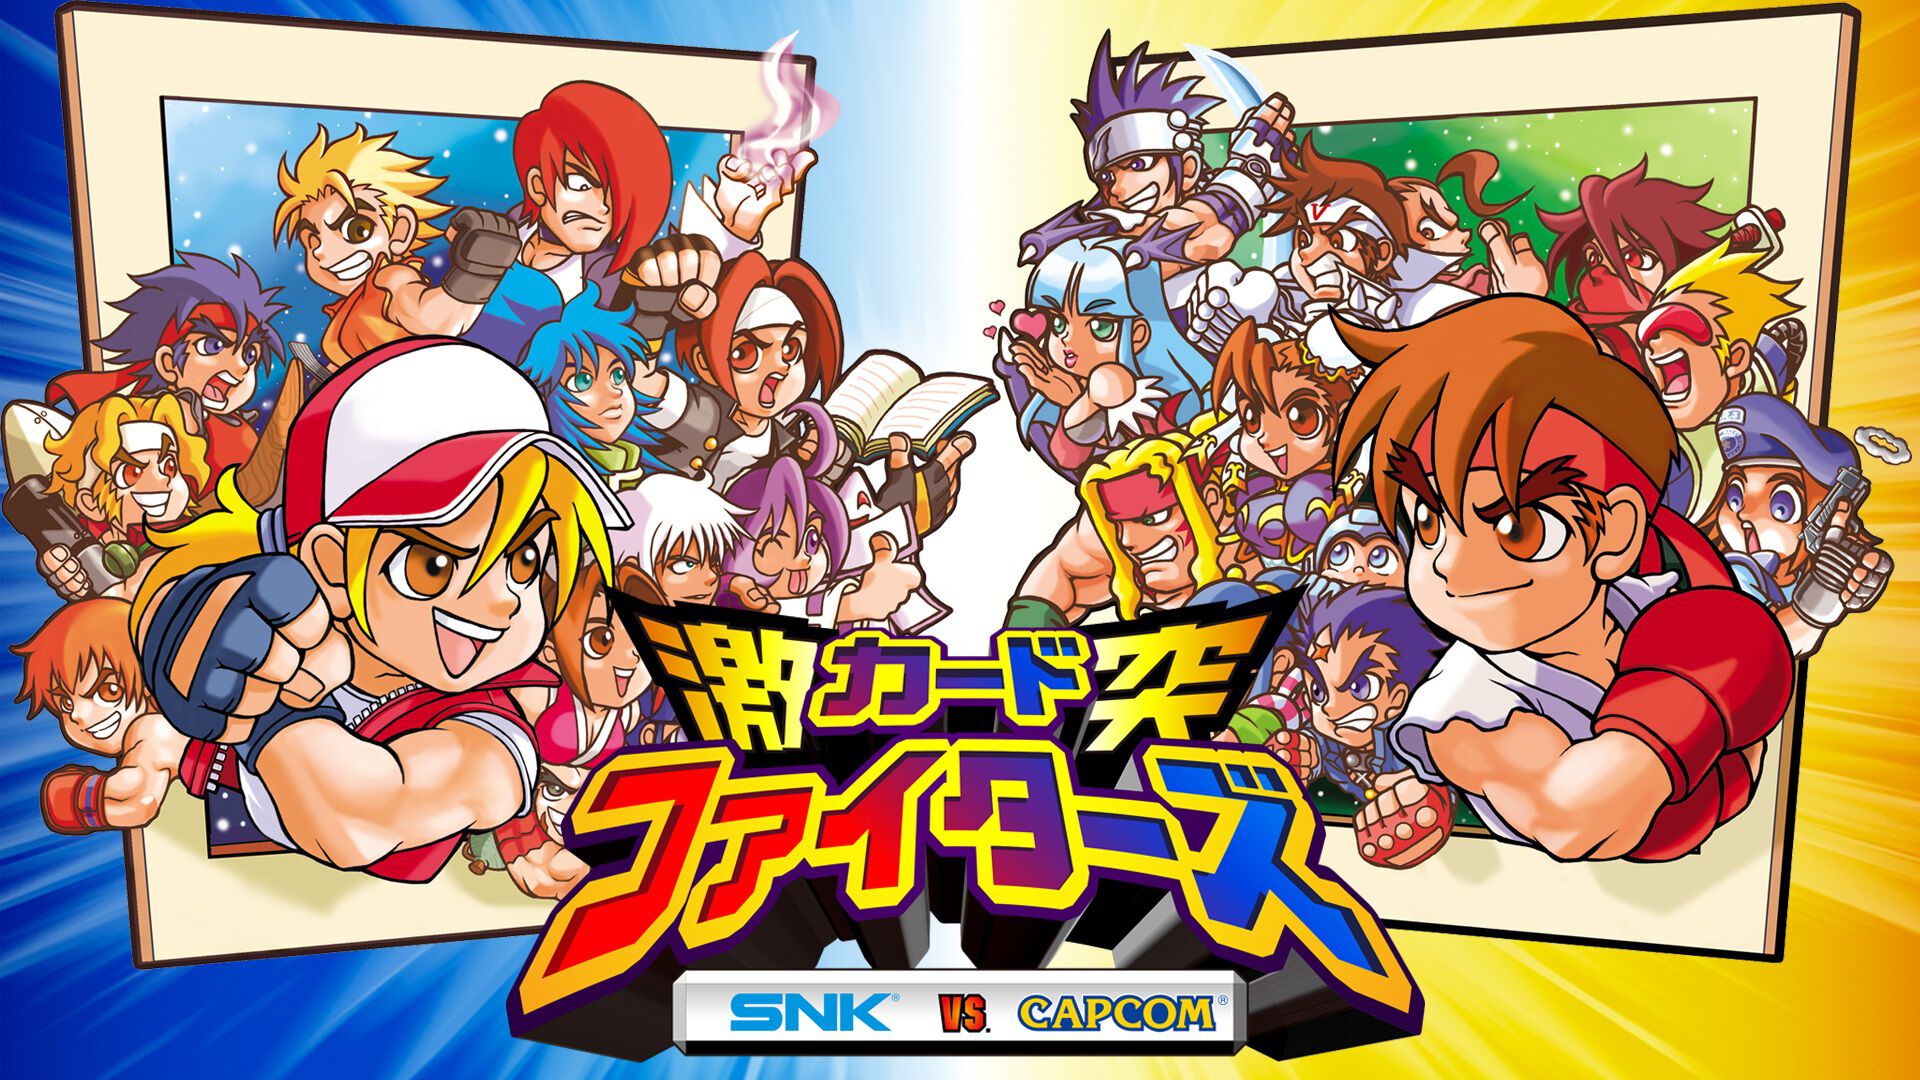 SNK VS. CAPCOM 激突カードファイターズ ダウンロード版 | My Nintendo